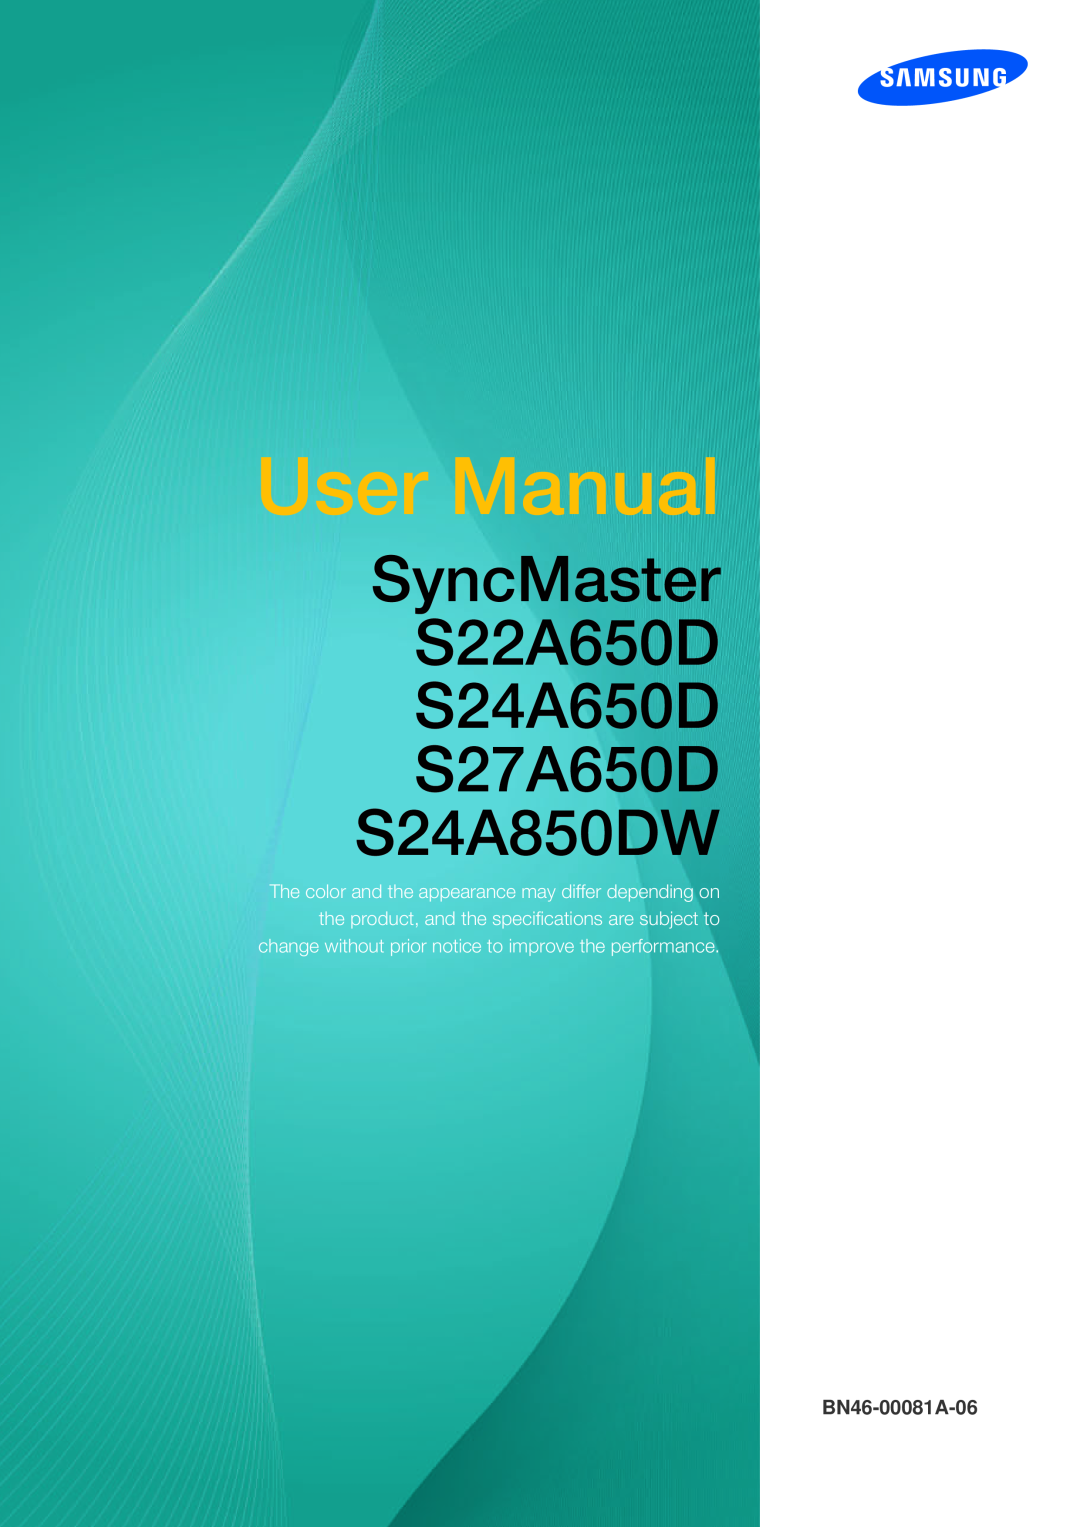 Samsung user manual User Manual, SyncMaster S22A650D S24A650D S27A650D S24A850DW, BN46-00081A-06 